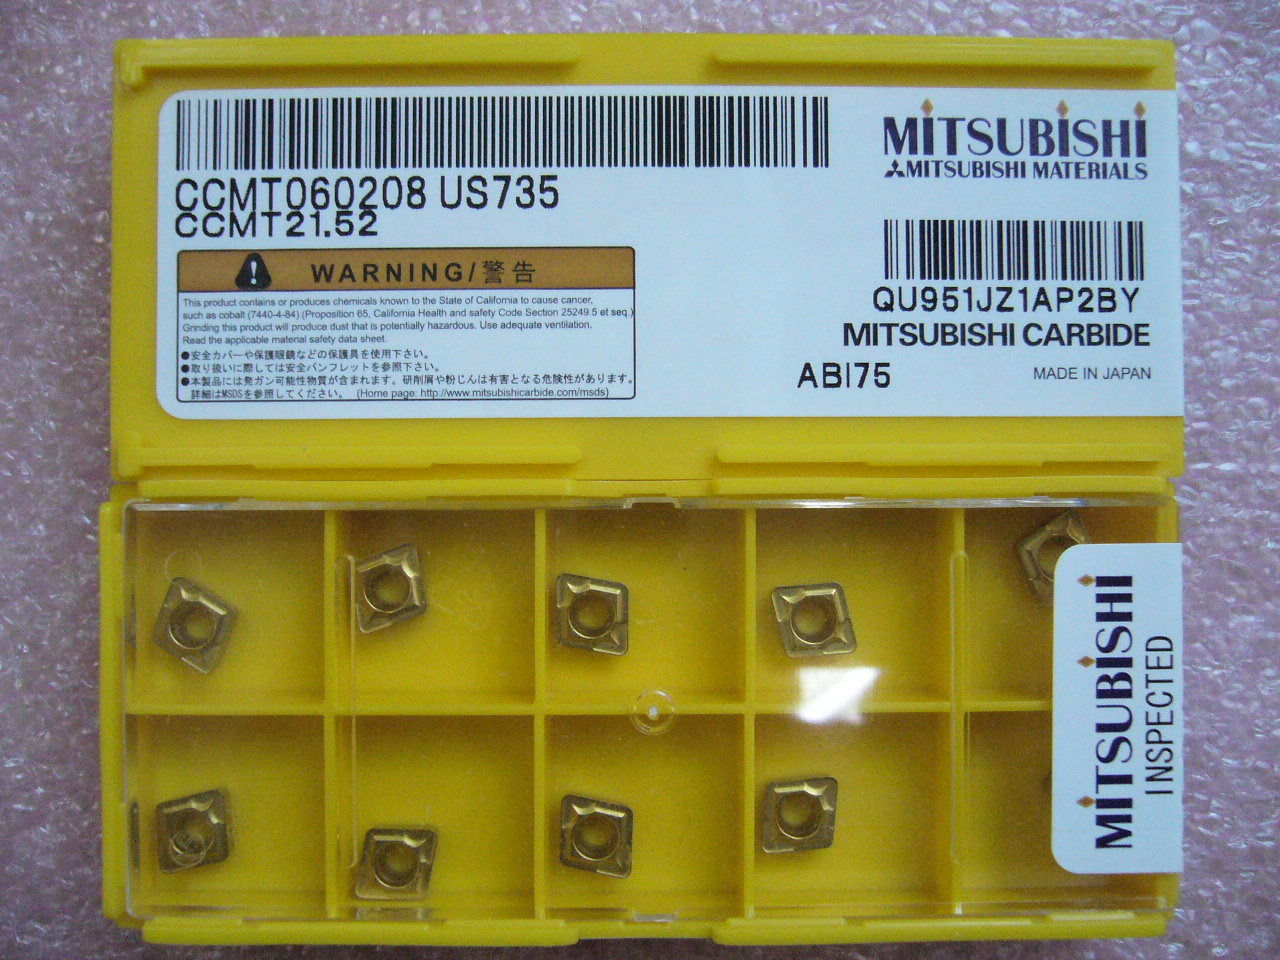 QTY 20x Mitsubishi CCMT21.52 CCMT060208 US735 NEW